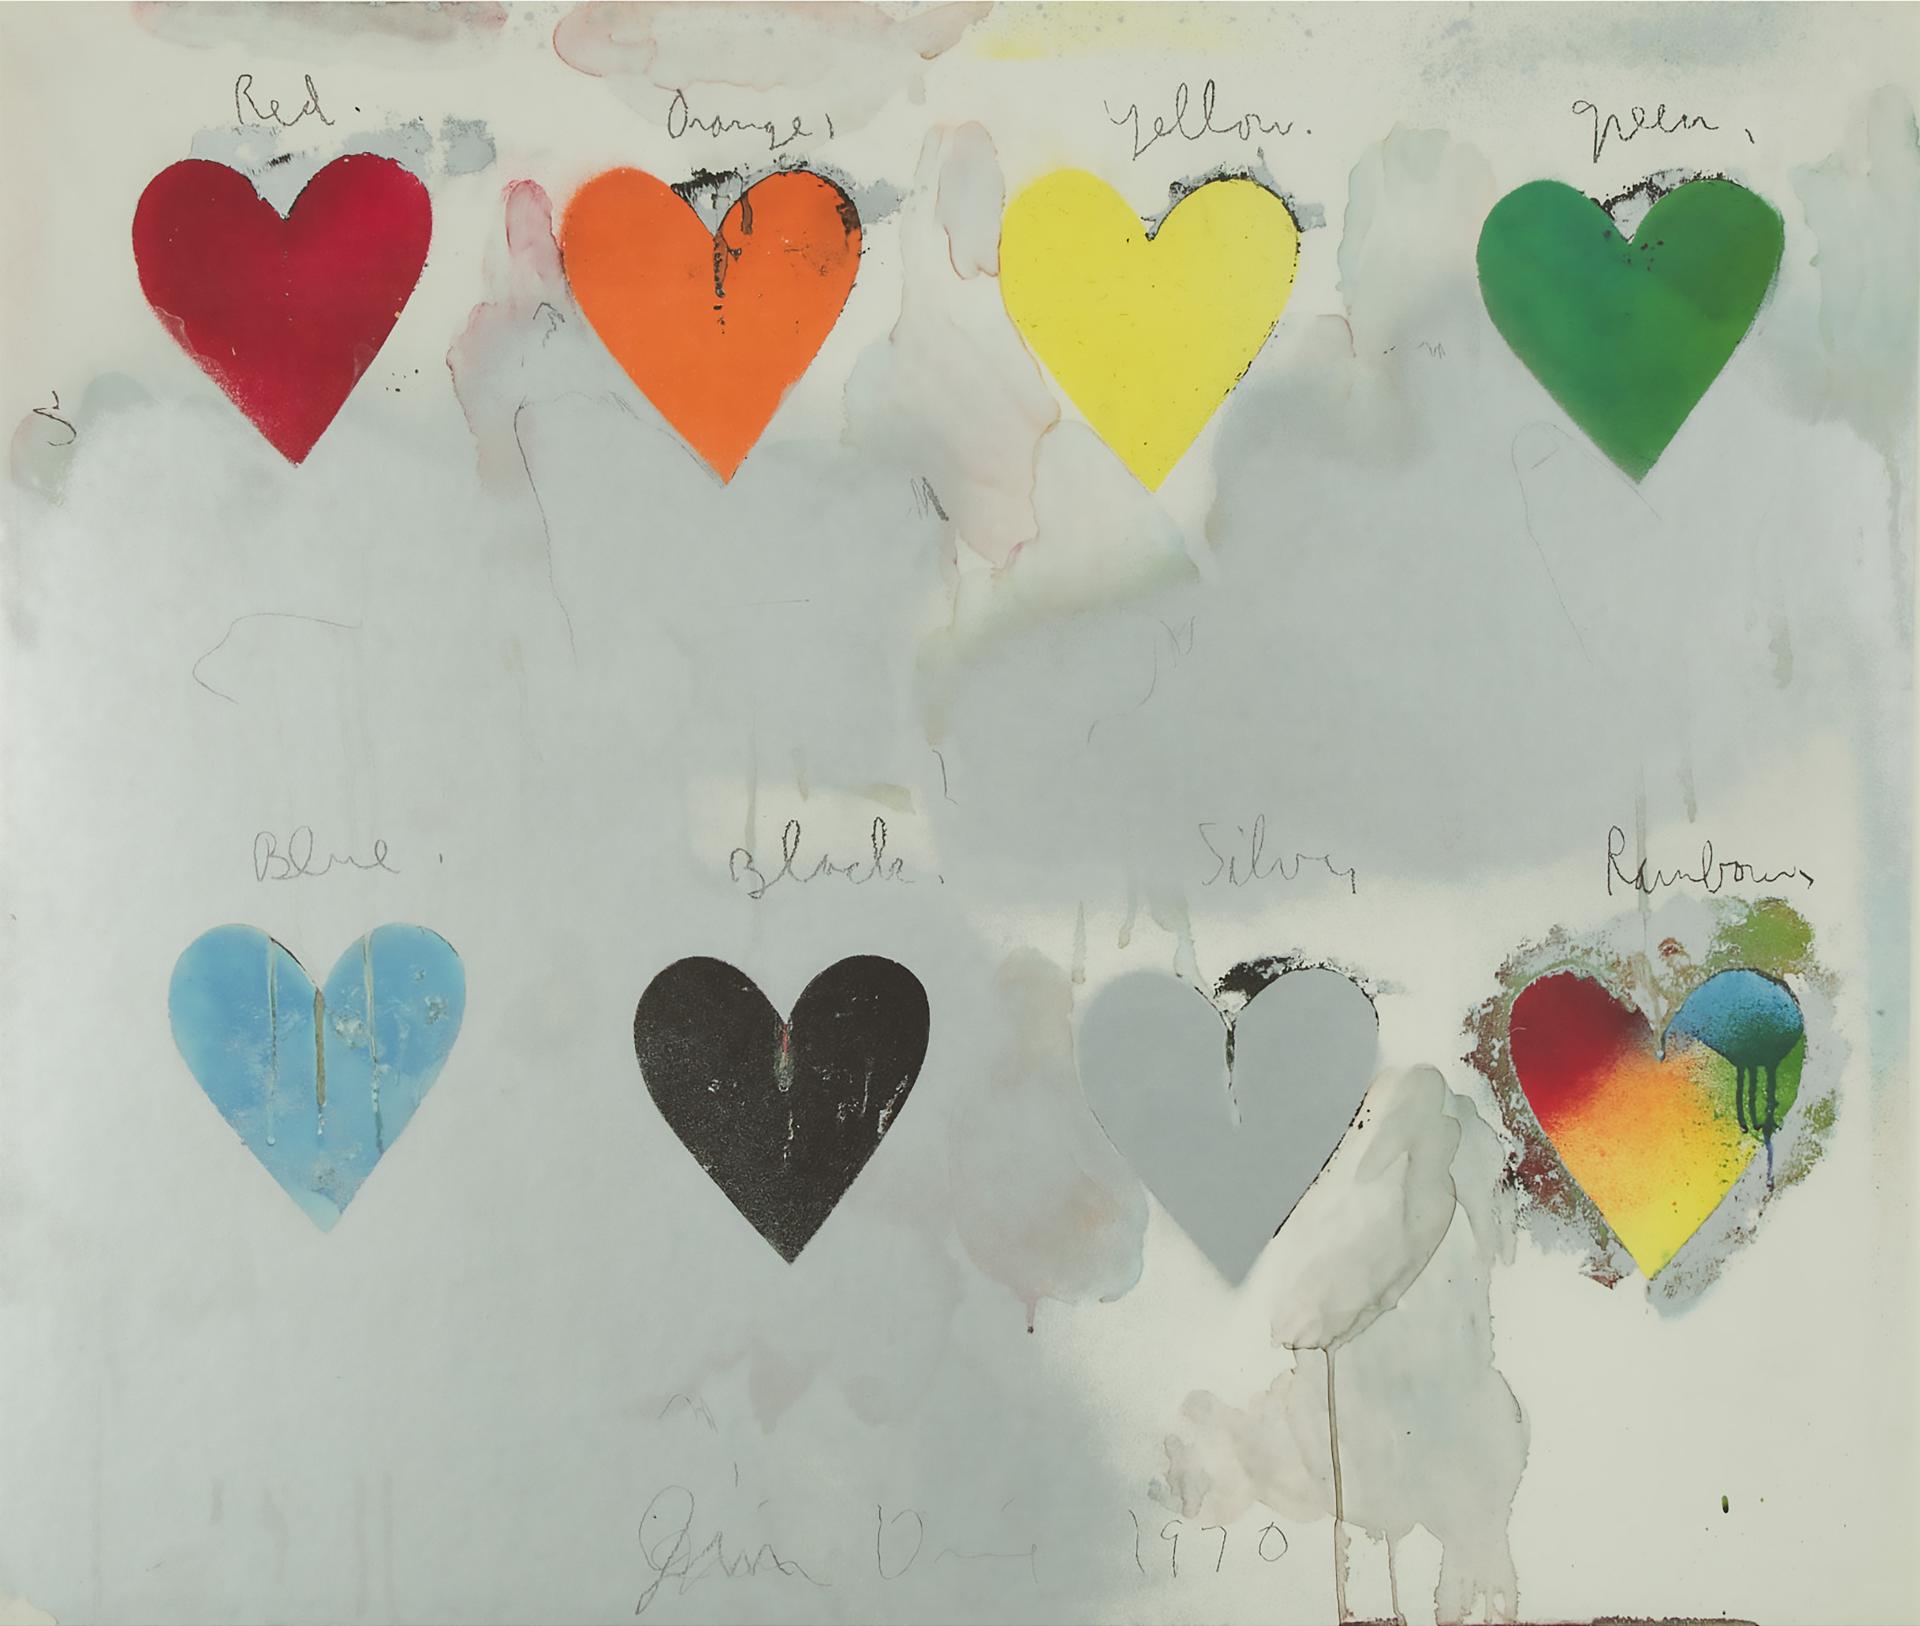 Jim Dine (1935) - Eight Hearts, 1970